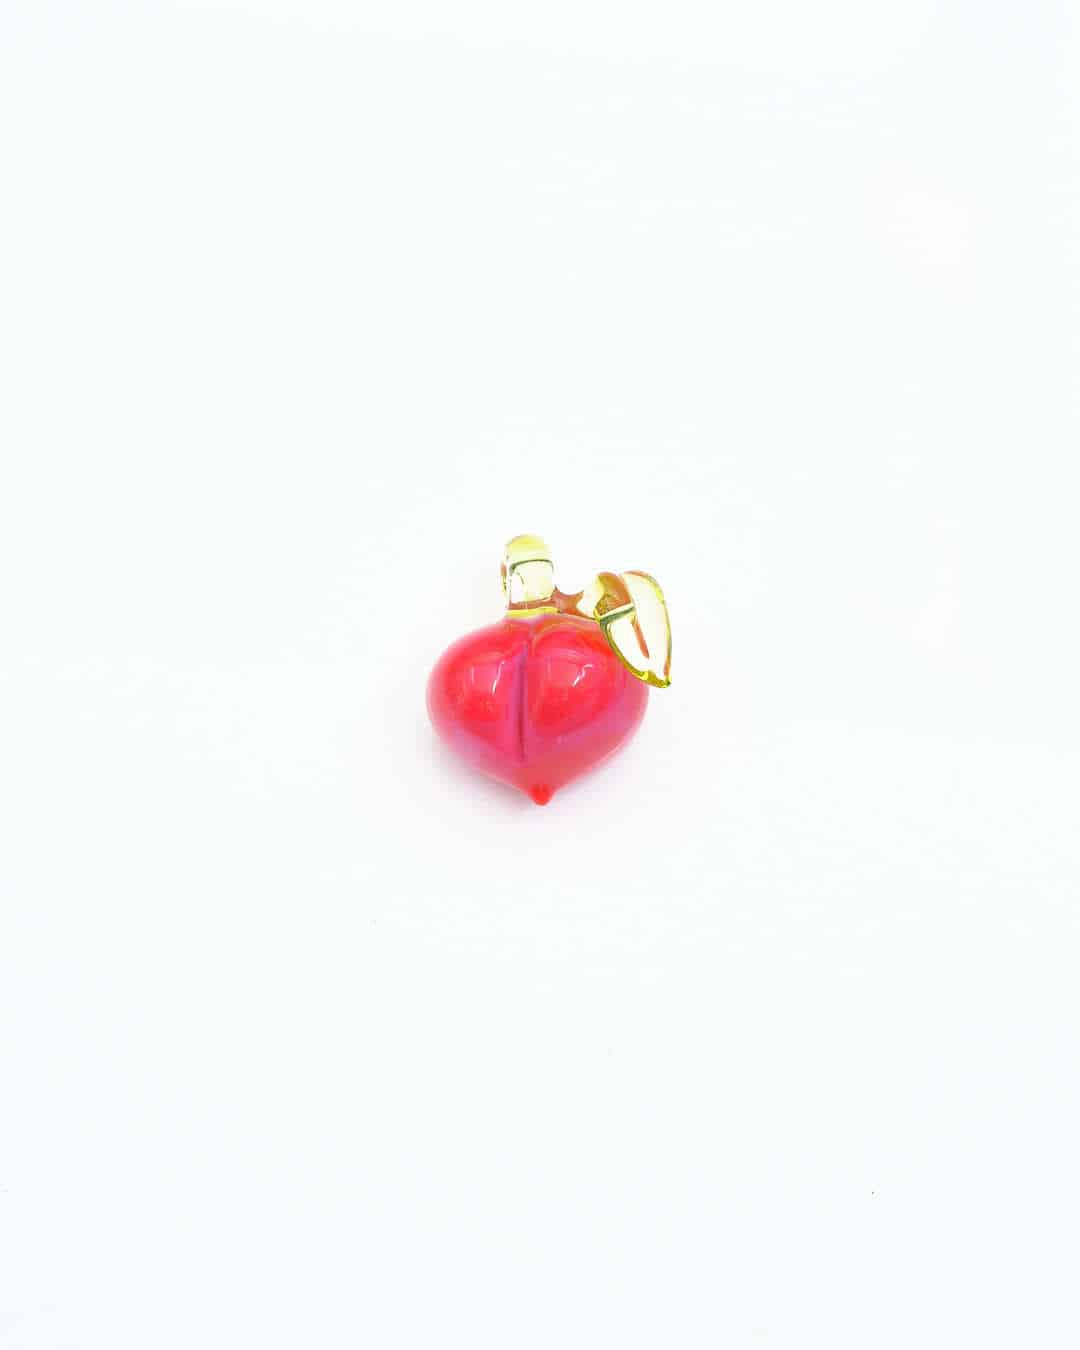 luxurious glass pendant - (42C) Red Peach w/ UV Green Stem Pendant by Gnarla Carla